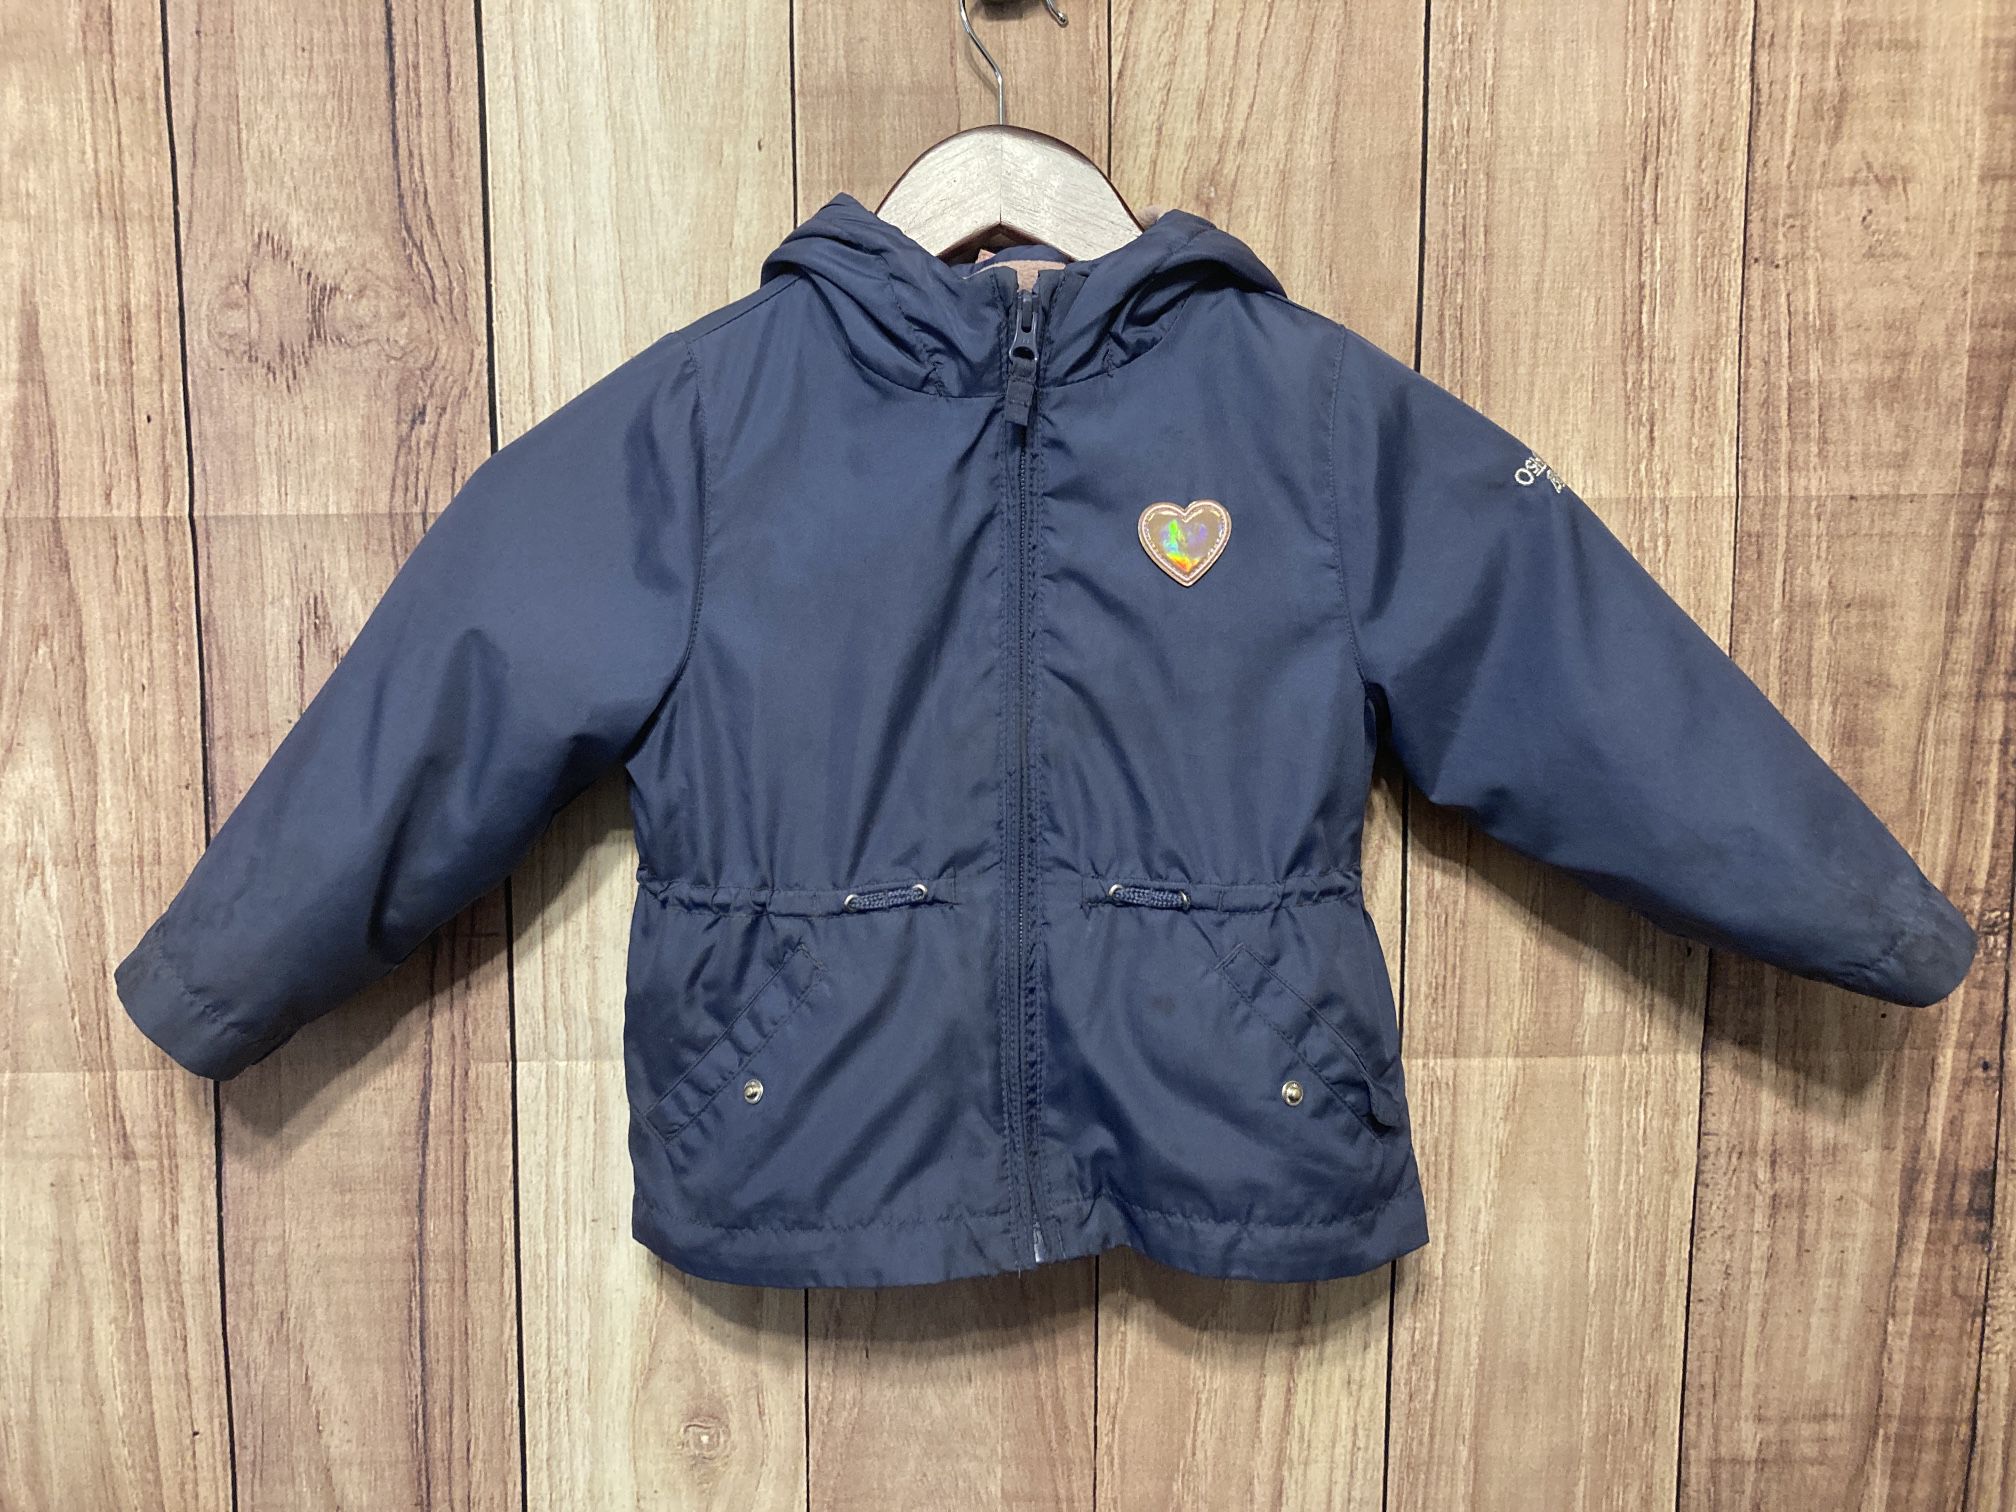 Oshkosh B’gosh 3T Toddler 3 in 1 winter jacket blue girls pink heart